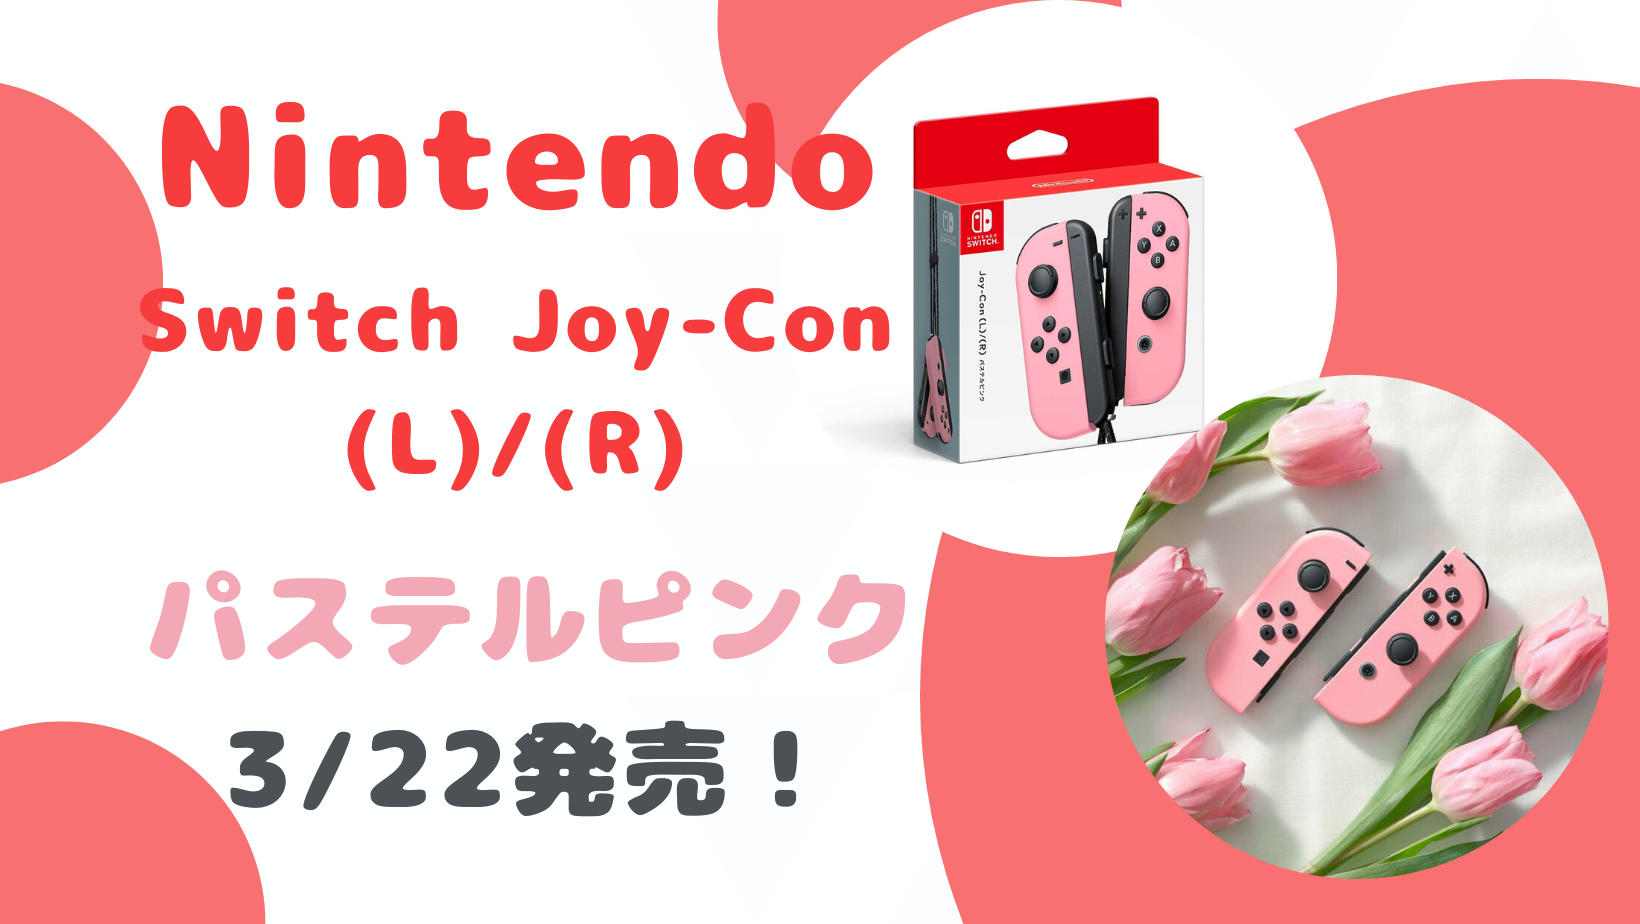 Nintendo Switch Joy-Con 新色パステルピンク(L)/(R) 3月22日発売決定 